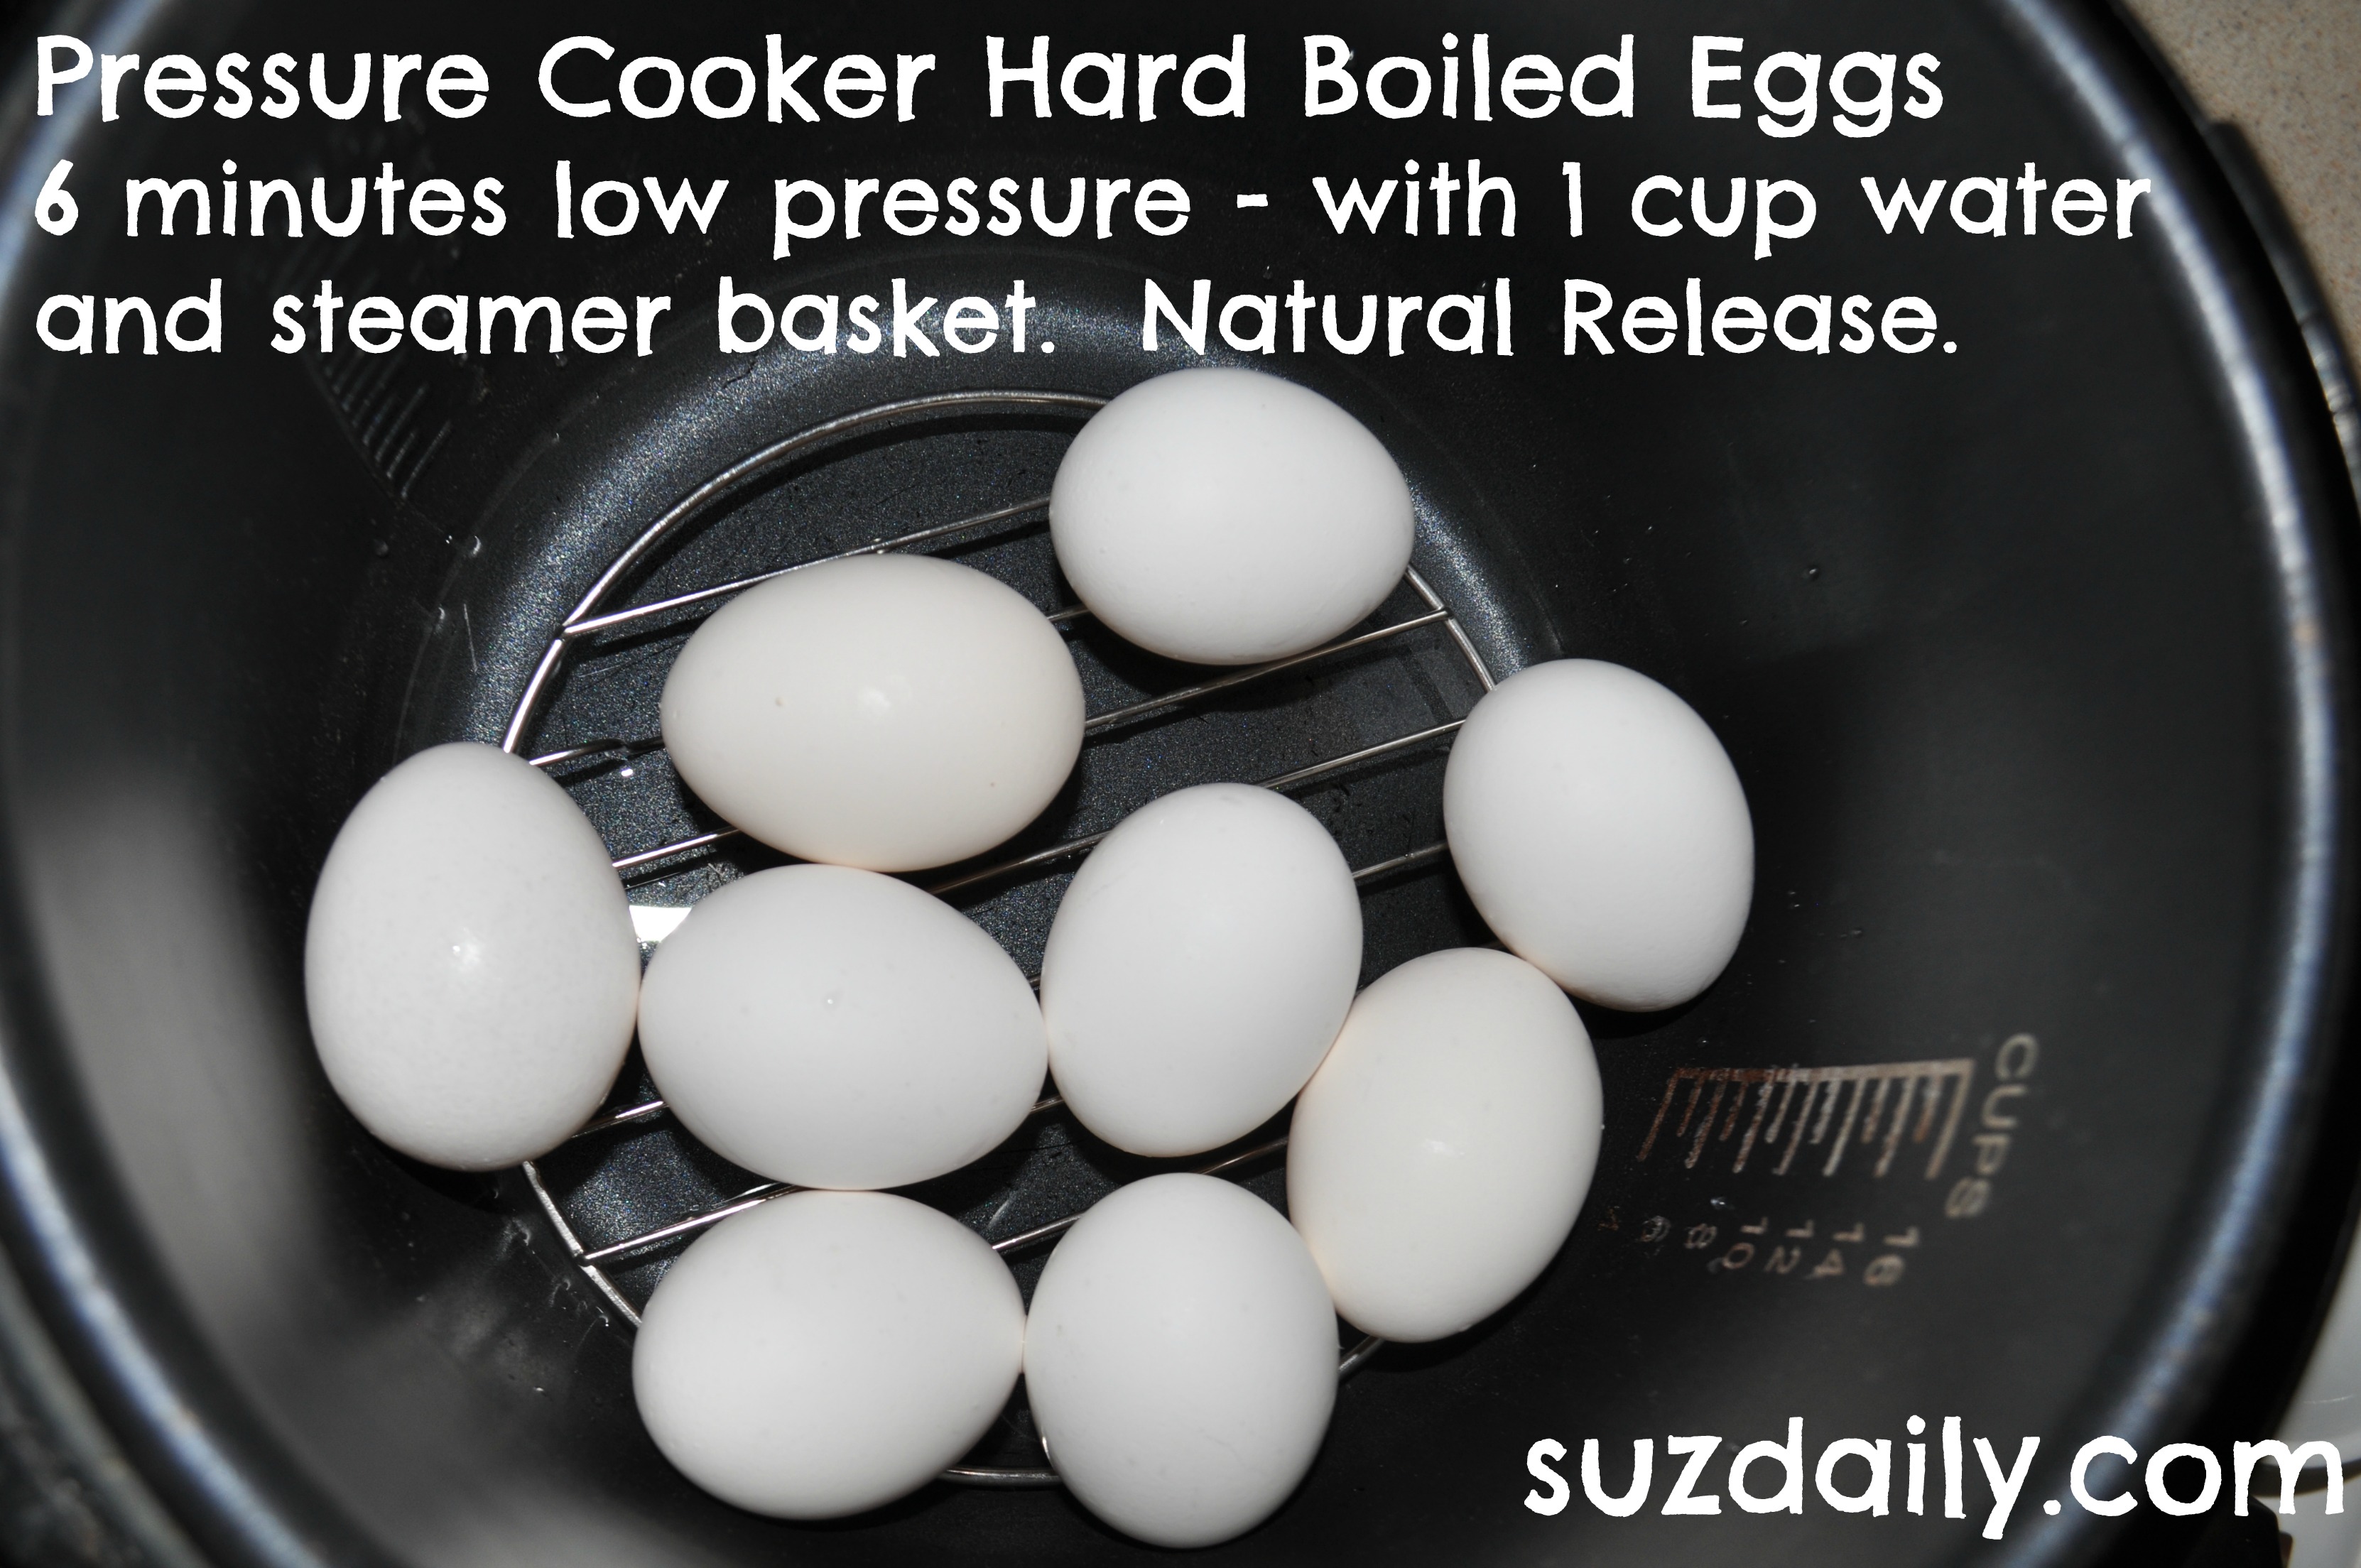 https://www.suzdaily.com/wp-content/uploads/2013/07/pressure-cooker-hard-boiled-eggs-2.jpg